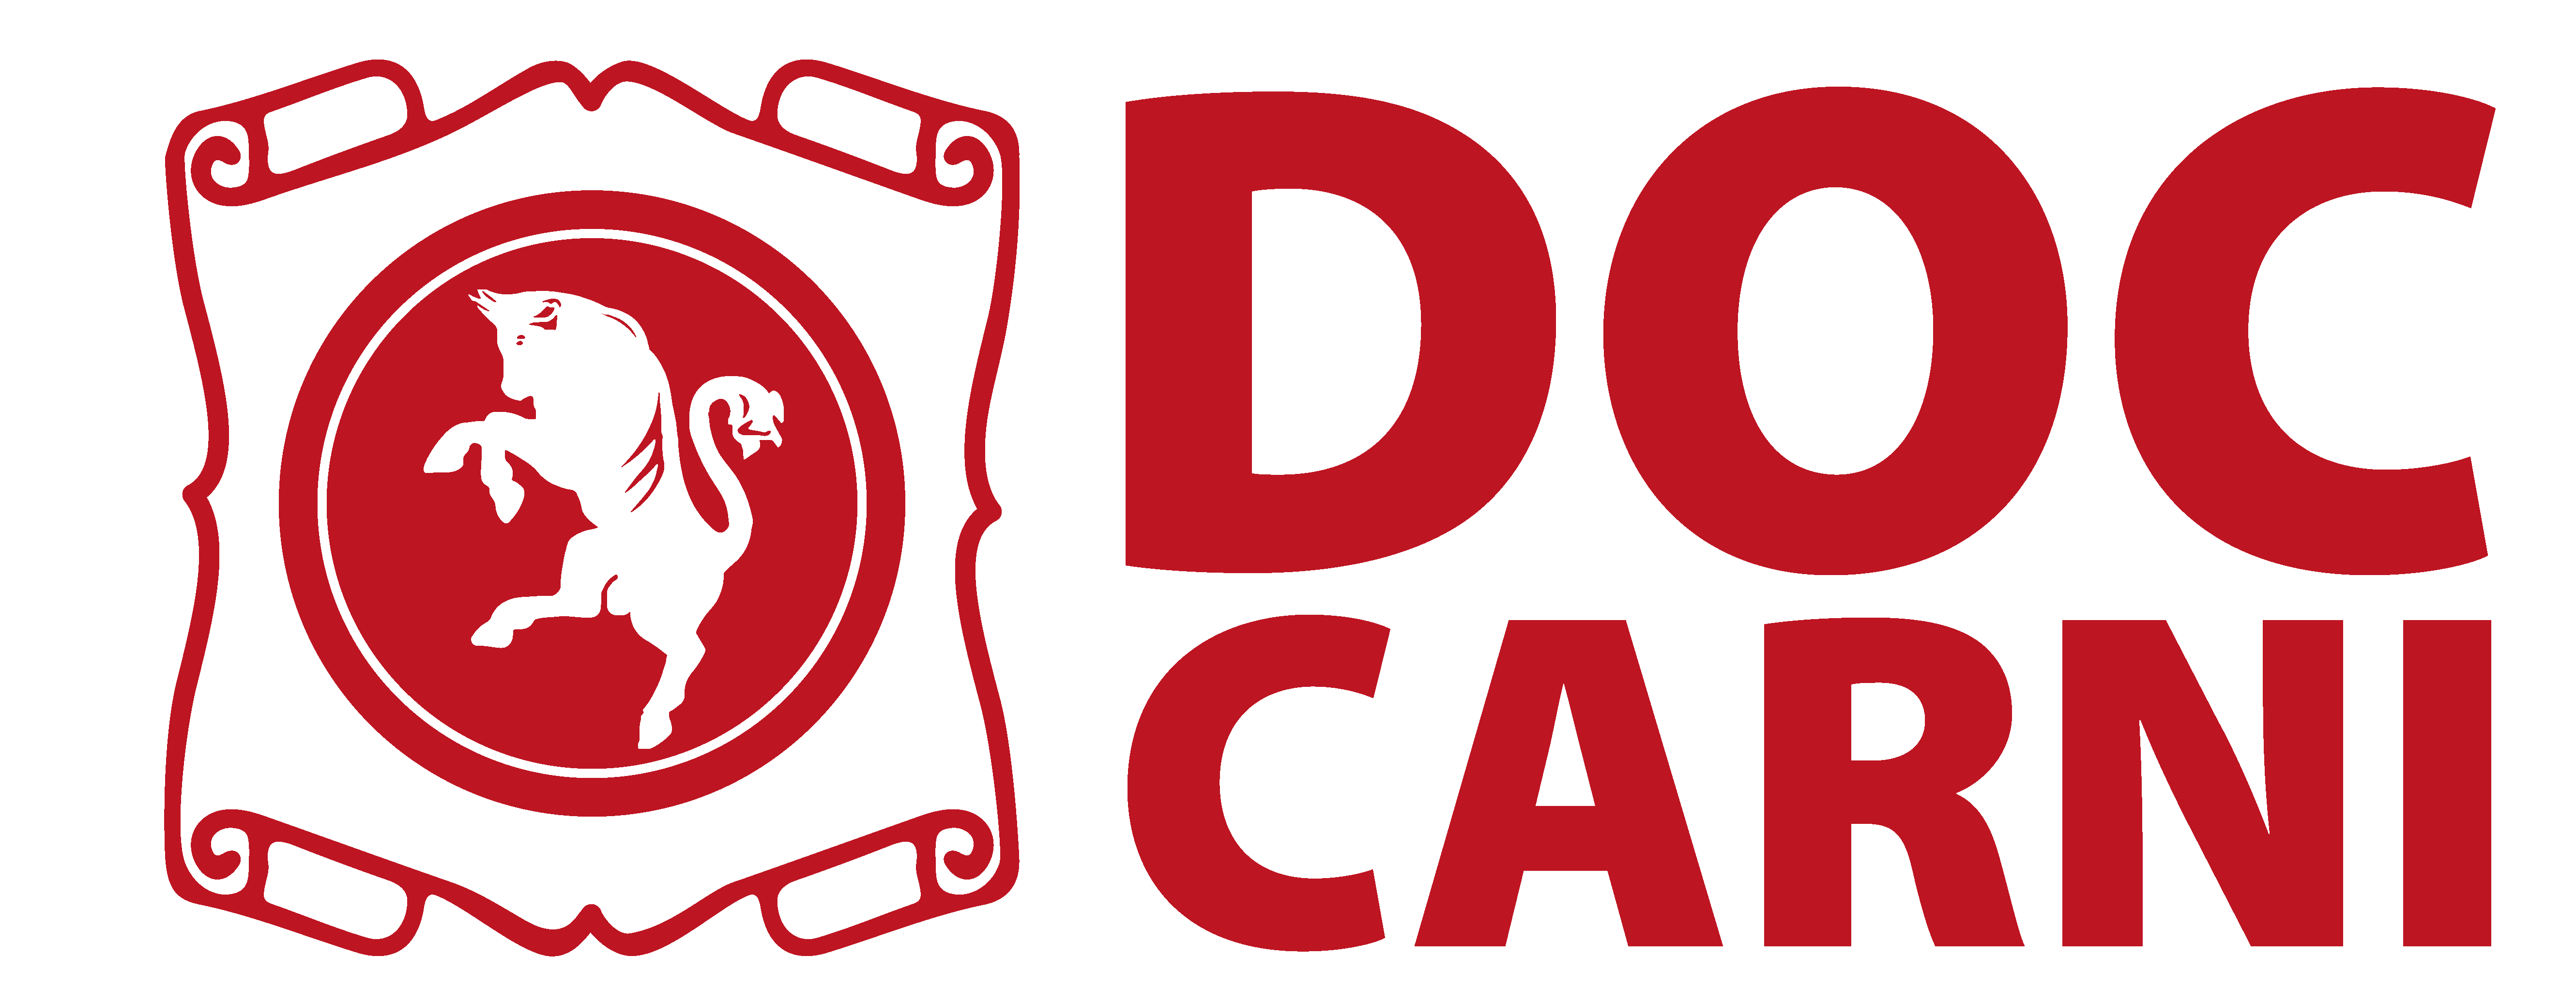 Doc Carni snc – Salumi artigianali di qualità